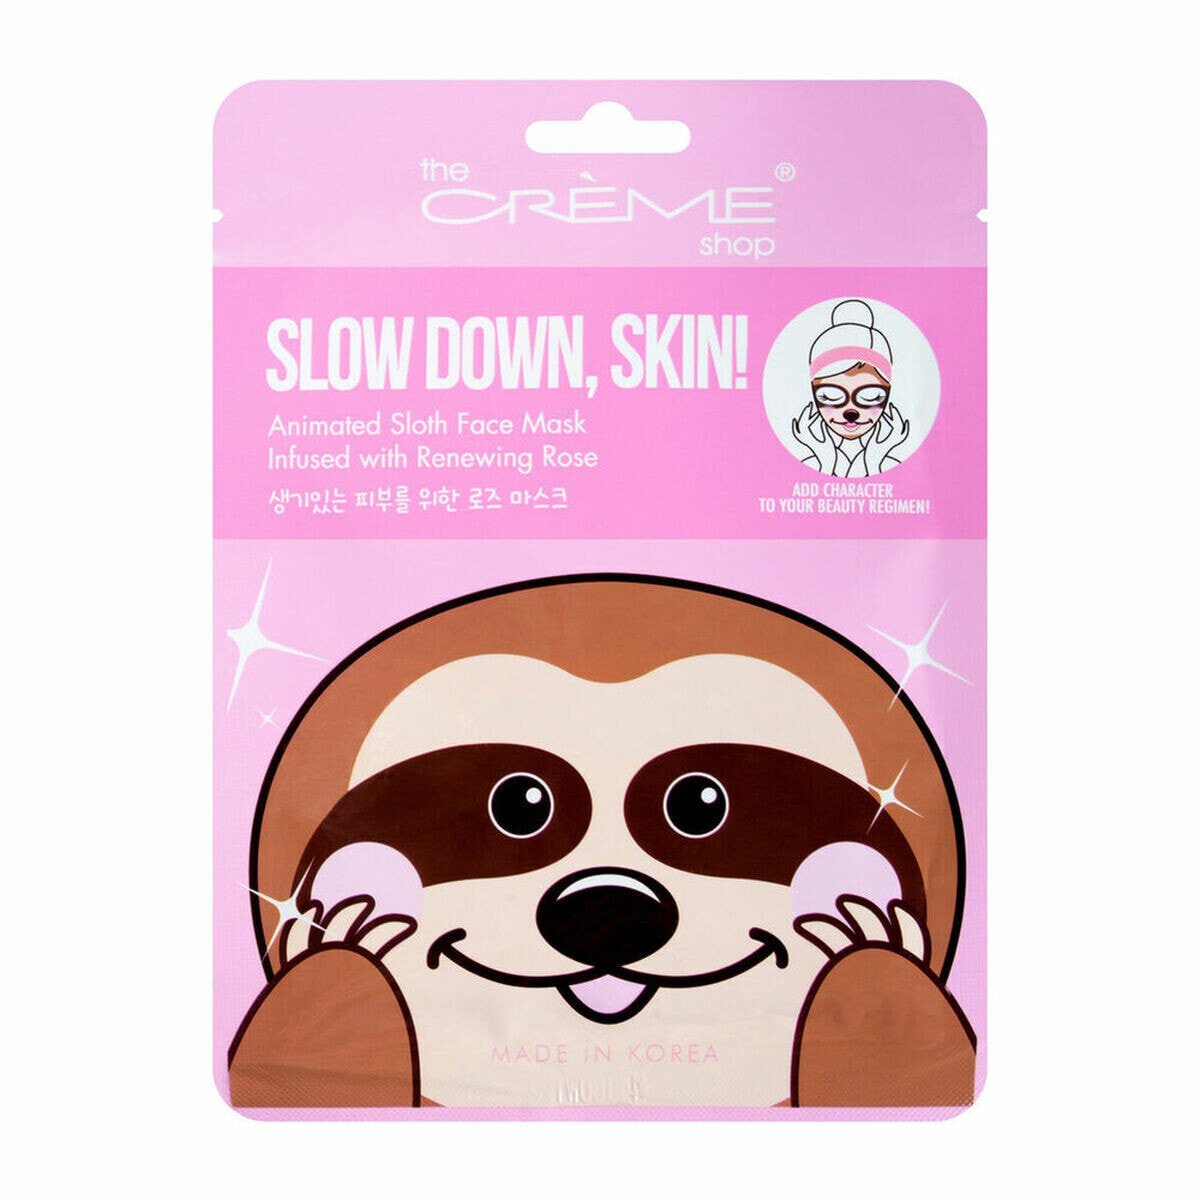 Facial Mask The Crème Shop Slow Dawn, Skin! Sloth (25 g)